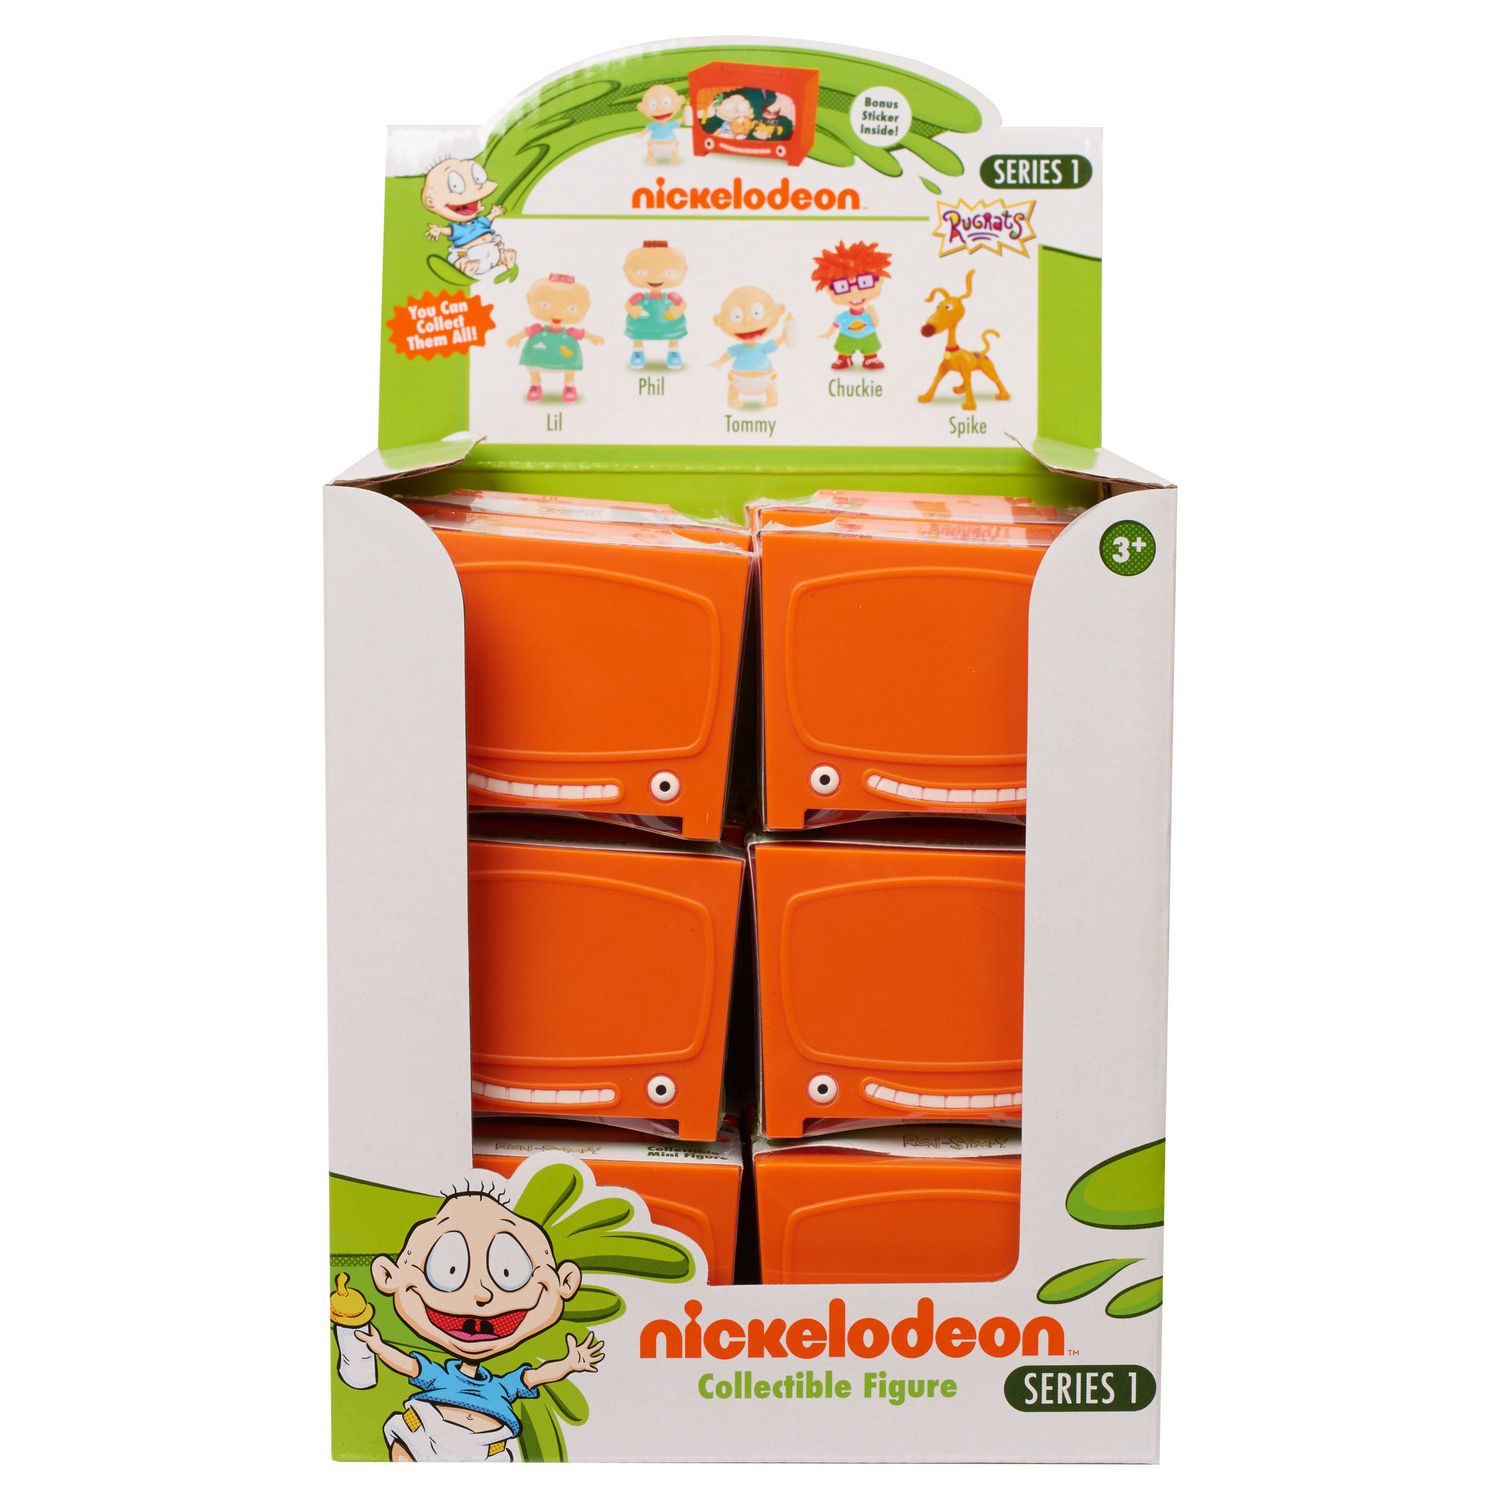 Nickelodeon Nick 90's Rugrats Blind Box | Walmart Canada